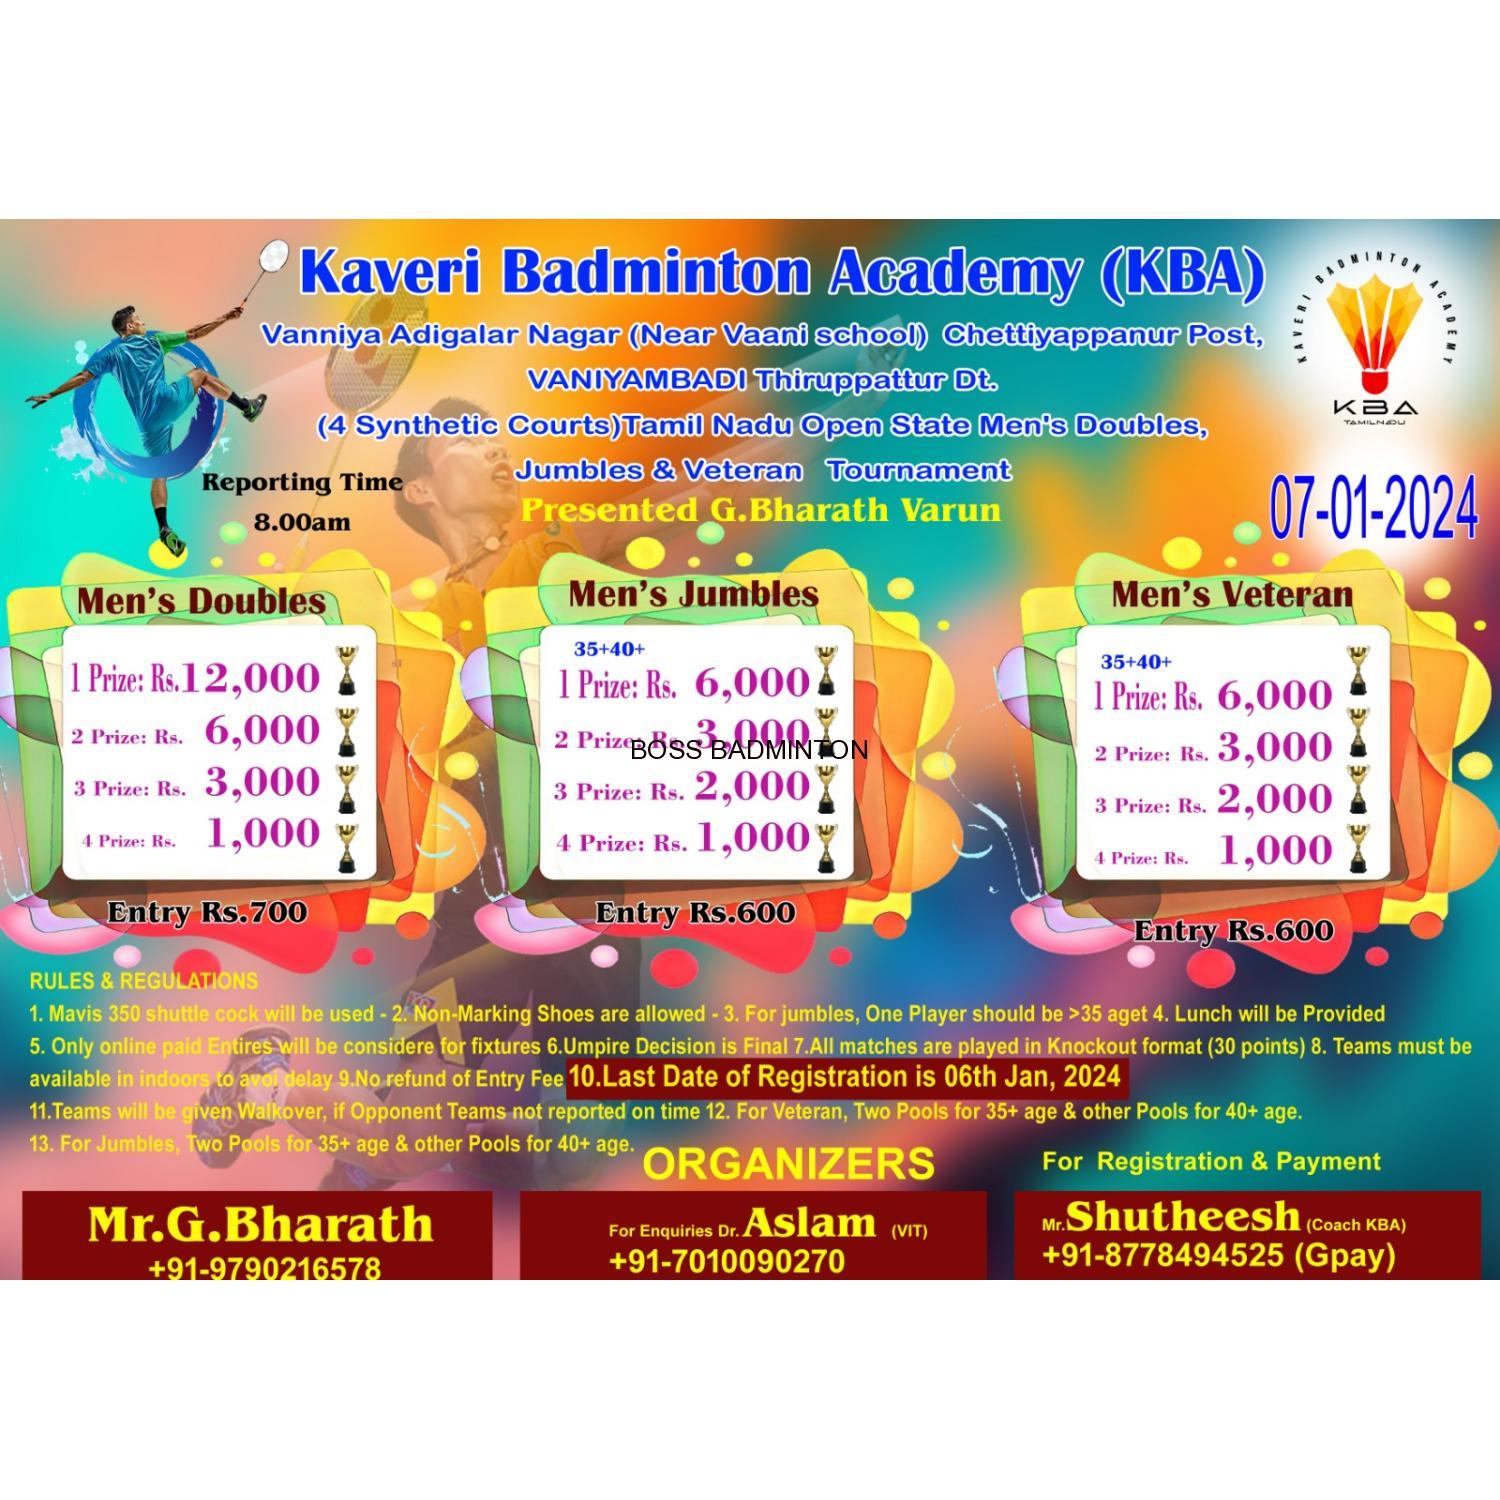 Kaveri Badminton Academy TamilNadu Open State Men's Badminton Tournament